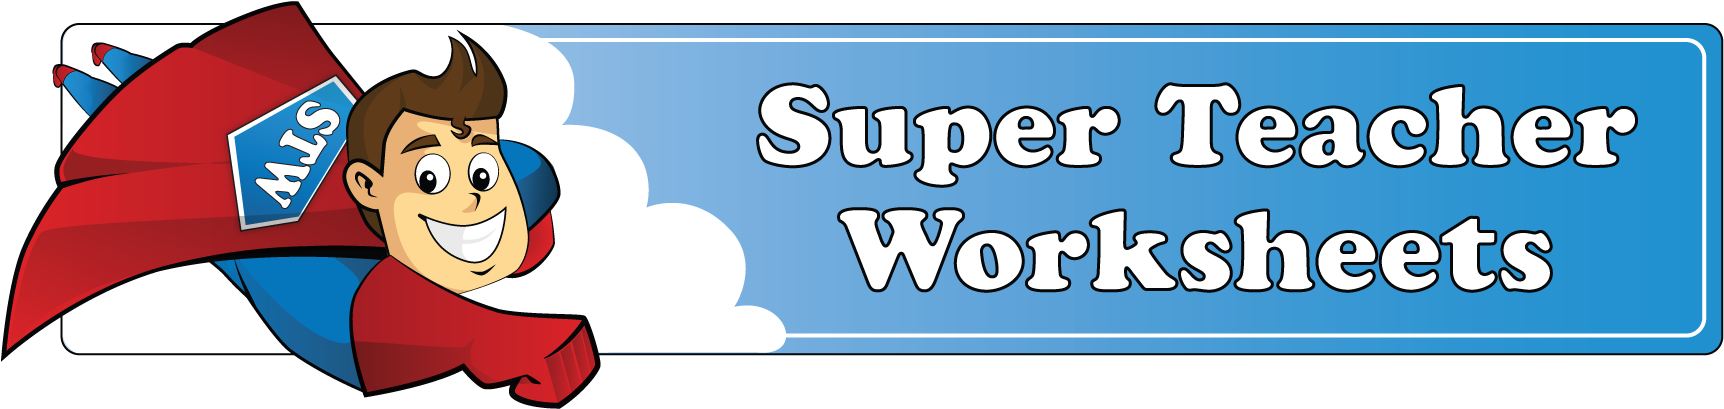 Super Teacher Worksheets Math 1st Grade Homeshealth - Art Pepper Living Legend (1730x420)